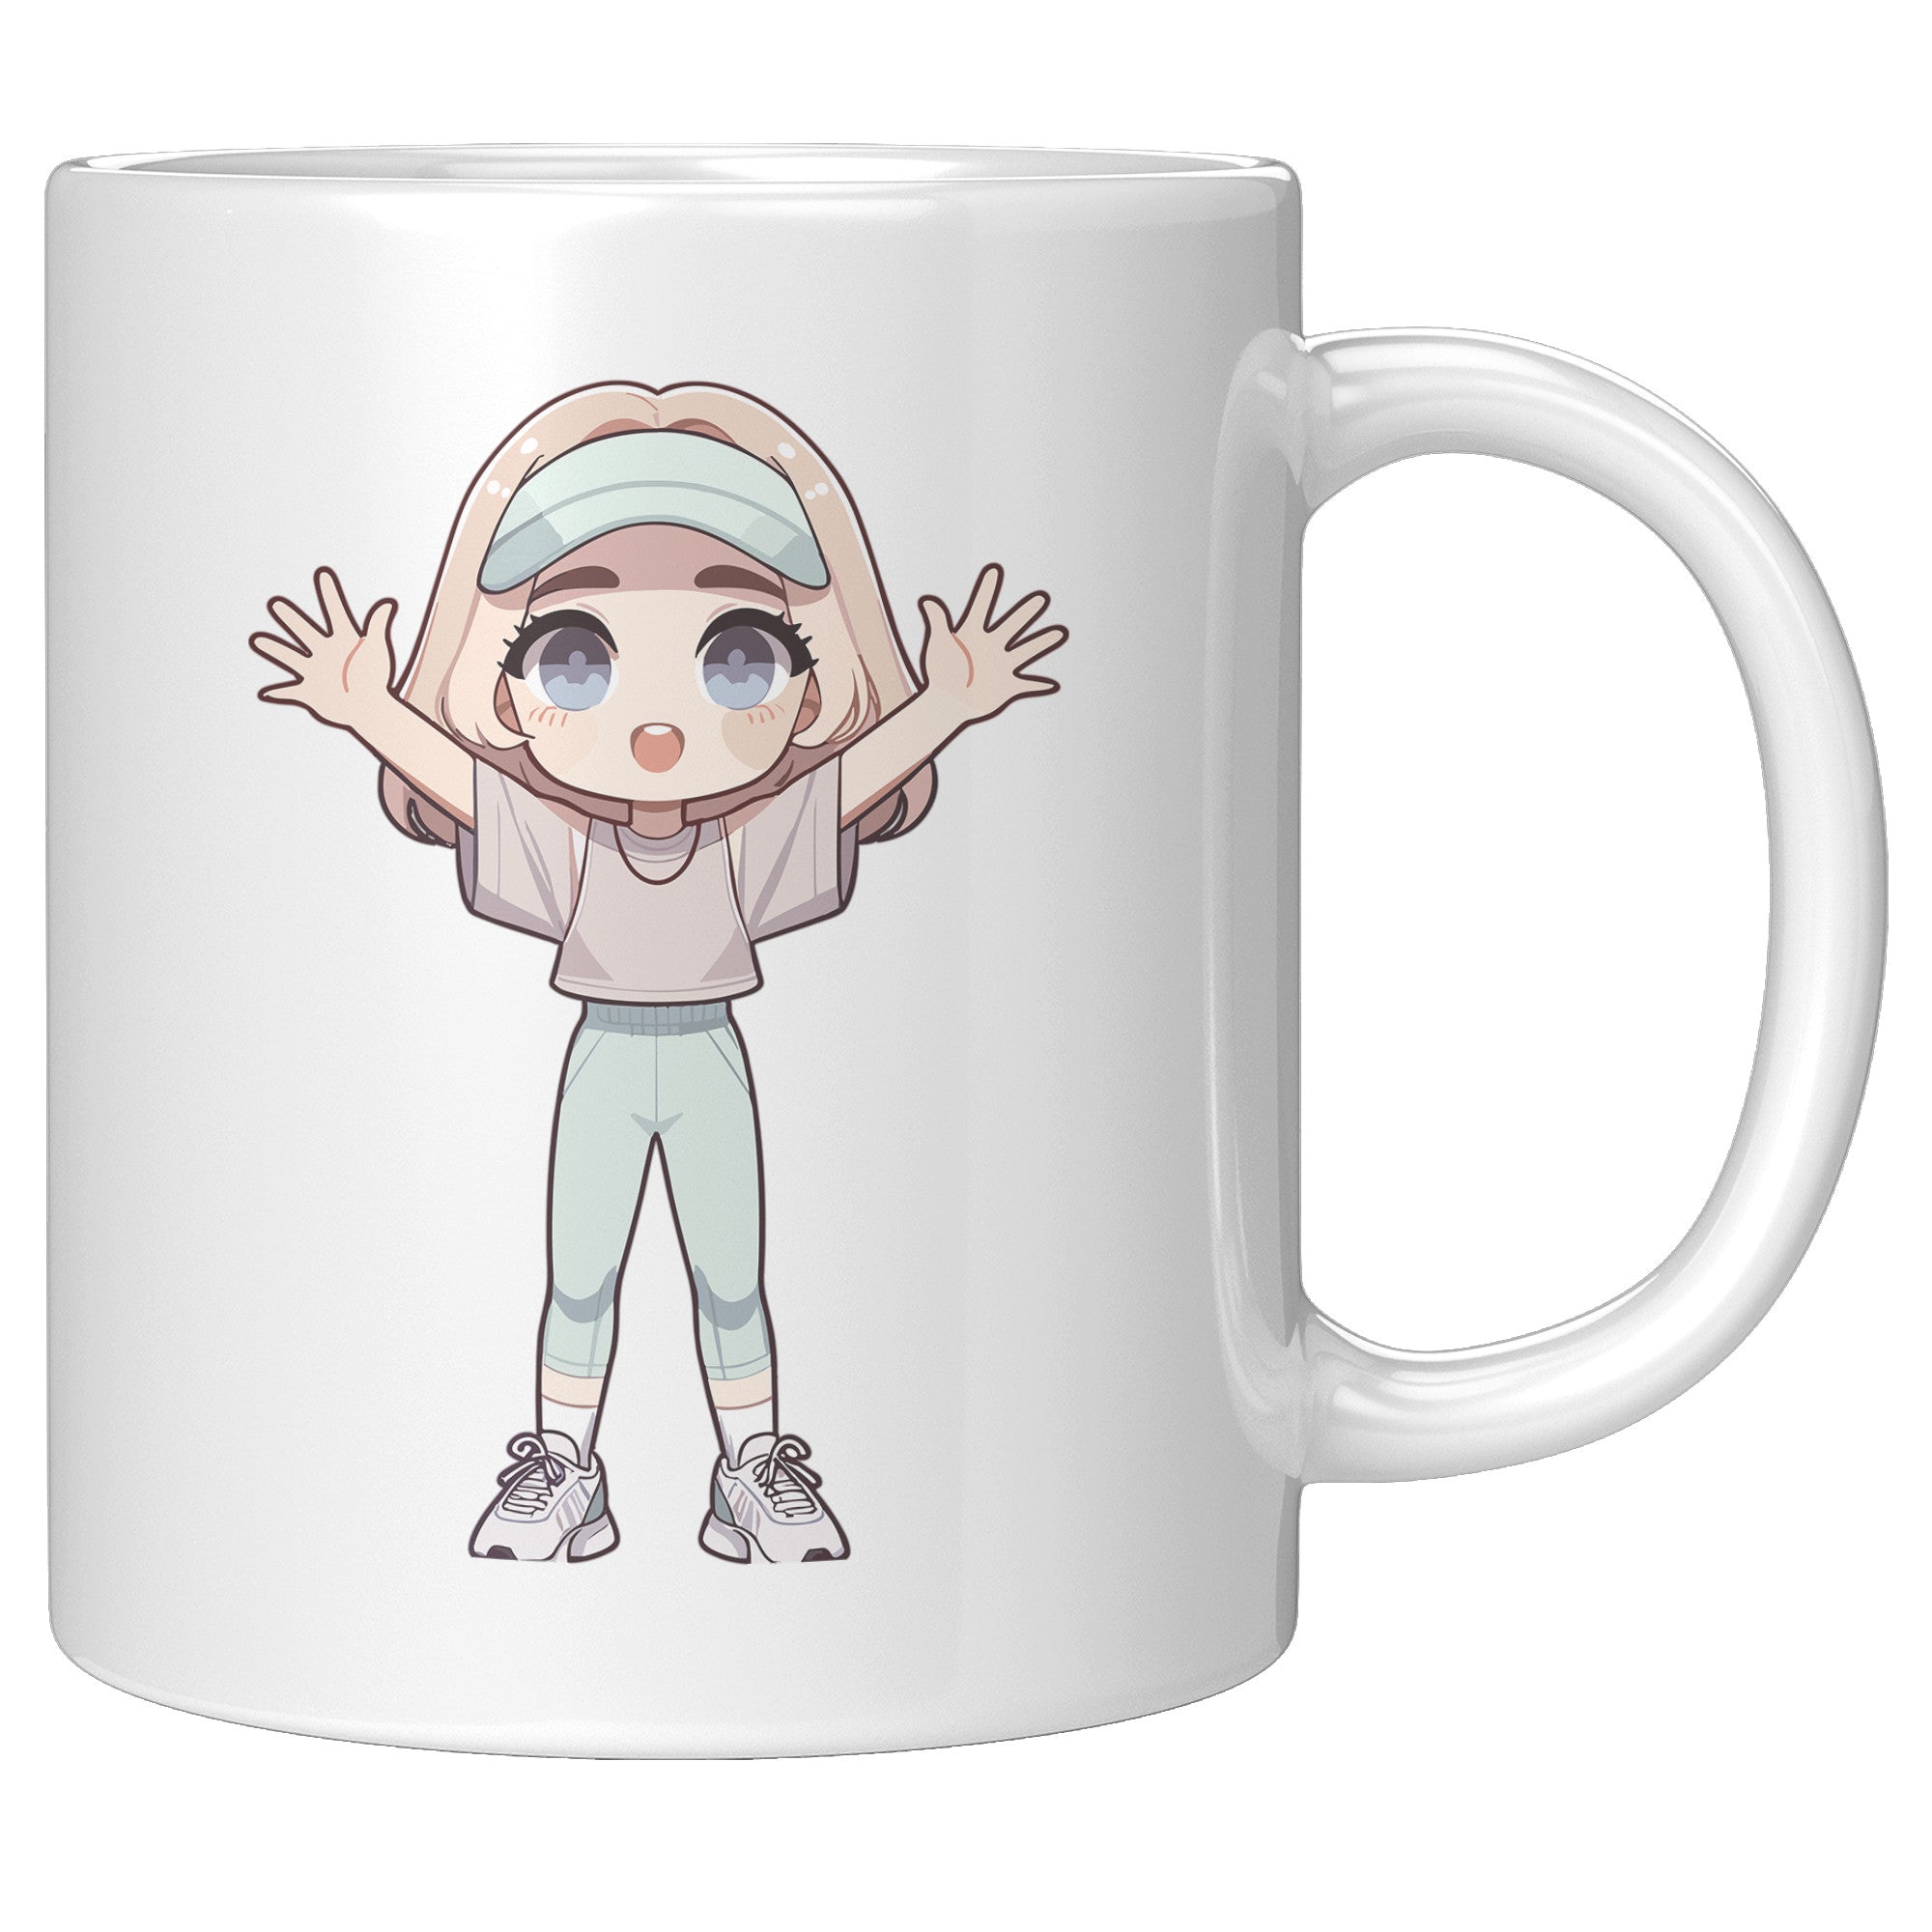 "Female Runner Coffee Mug - Inspirational Running Quotes Cup - Perfect Gift for Women Runners - Motivational Marathoner's Morning Brew" - P